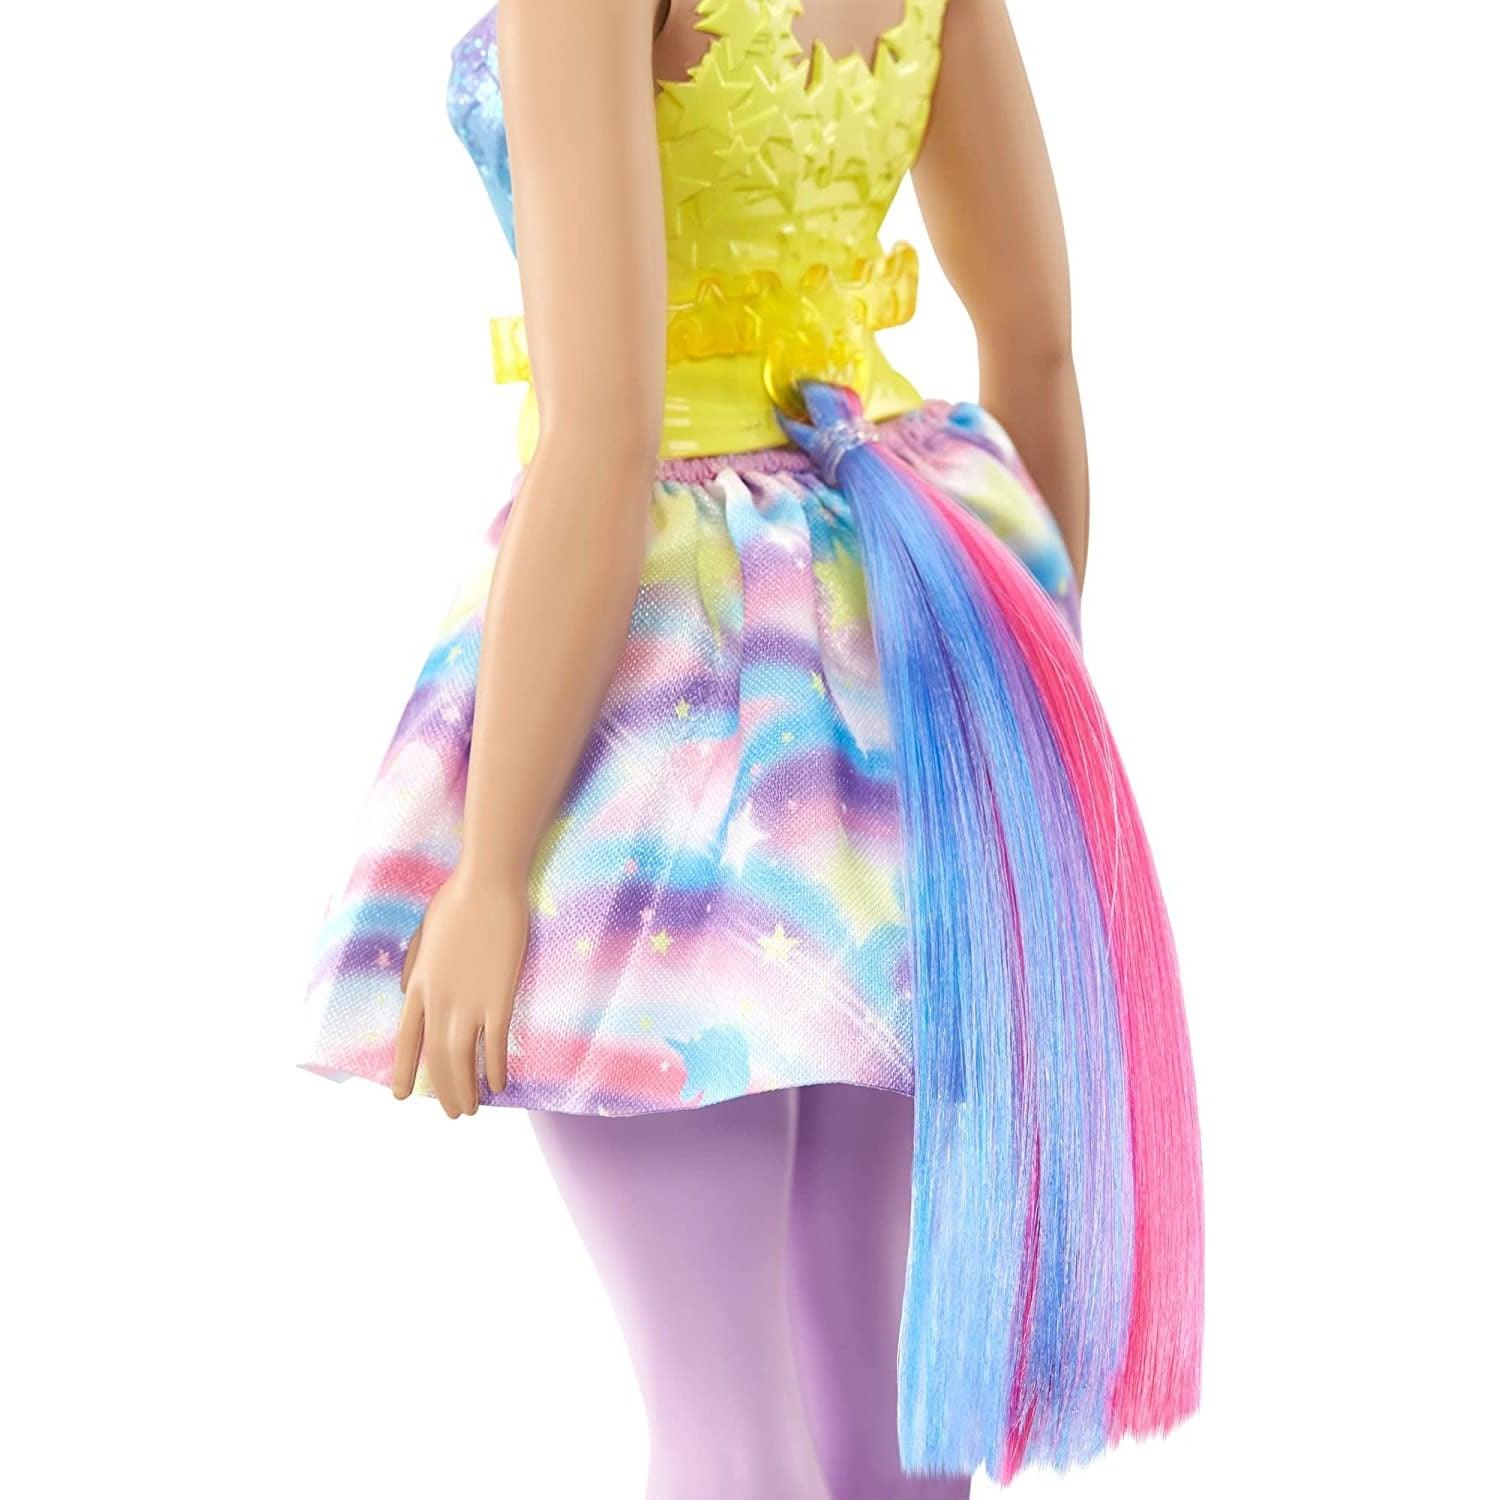 Barbie Dreamtopia Unicorn Doll (Curvy, Blue & Purple Hair), with Skirt, Removable Unicorn Tail & Headband - BumbleToys - 5-7 Years, Barbie, Fashion Dolls & Accessories, Girls, Mermaid, Pre-Order